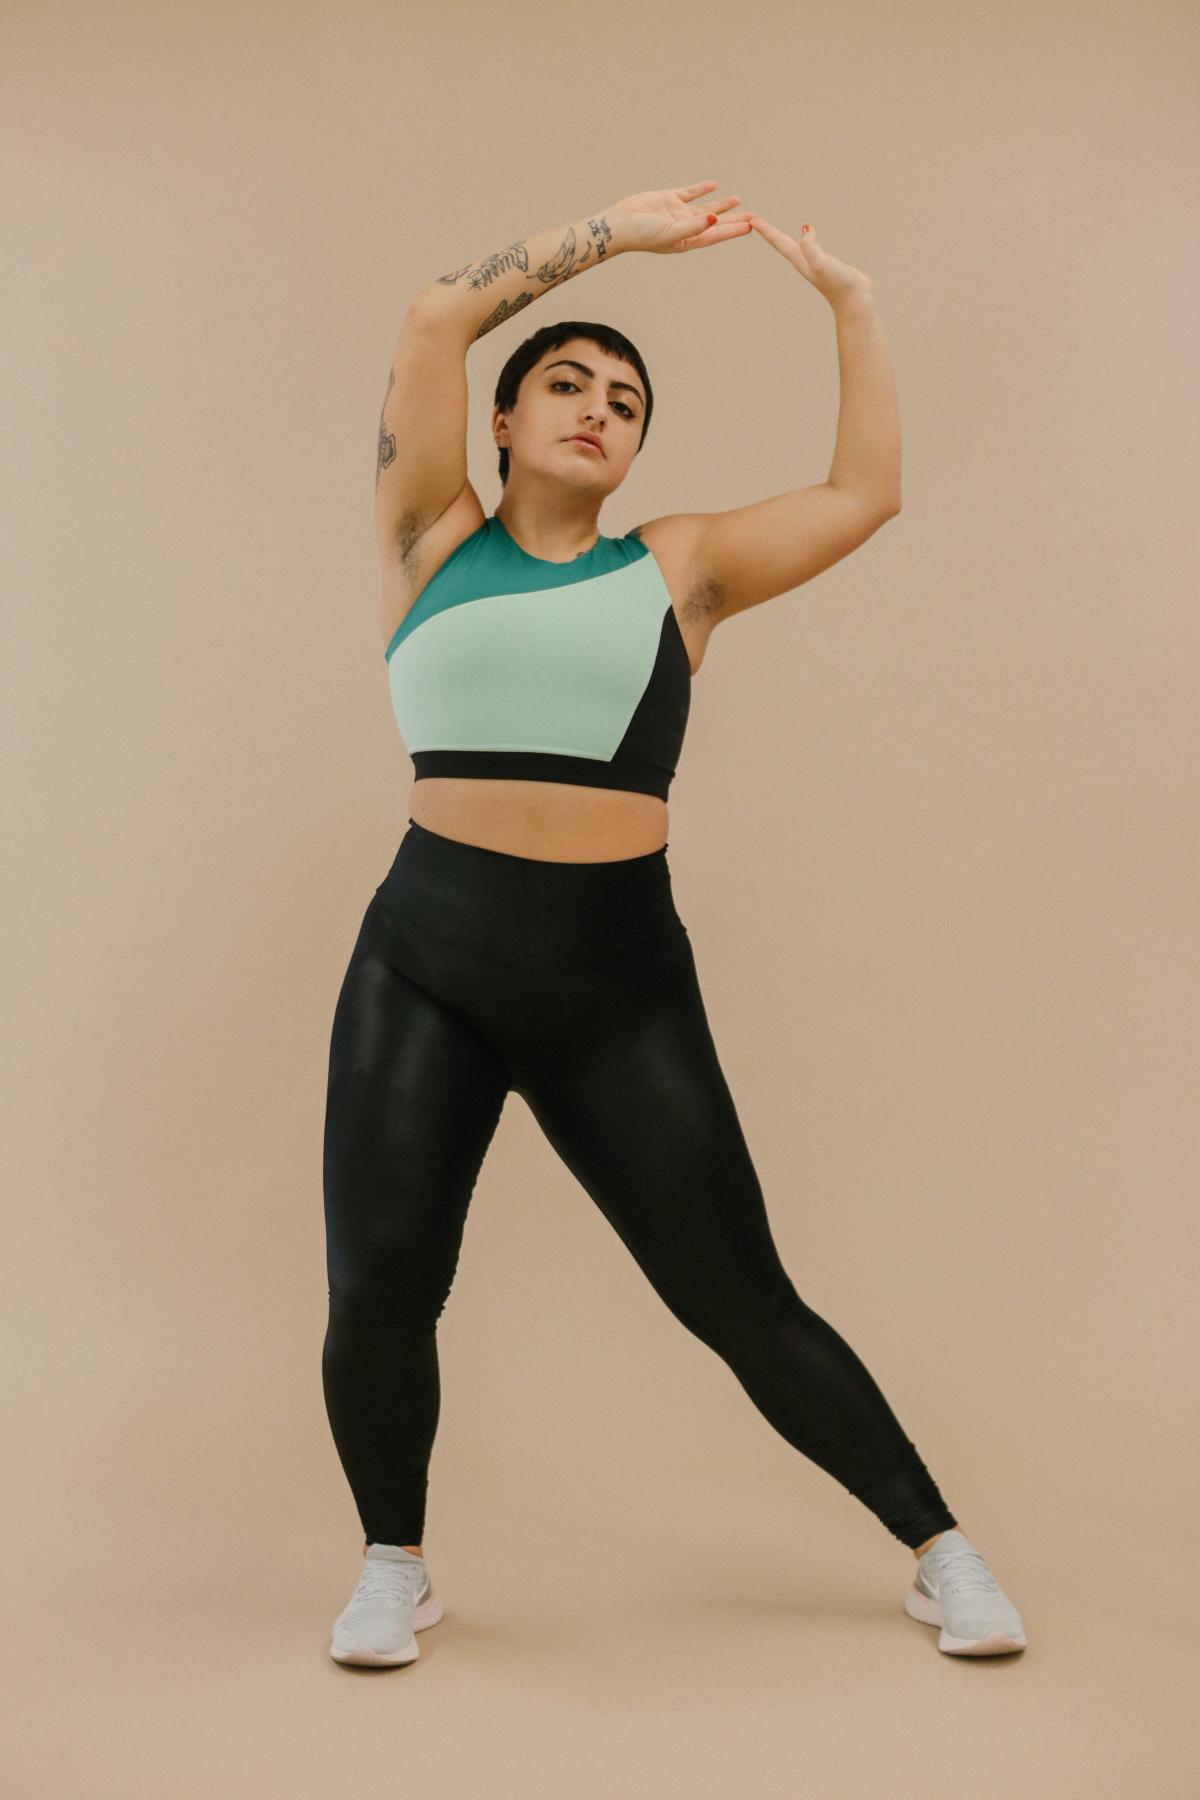 DIAZ Stretchable High Waist Sportswear Active Yoga Workout Gym